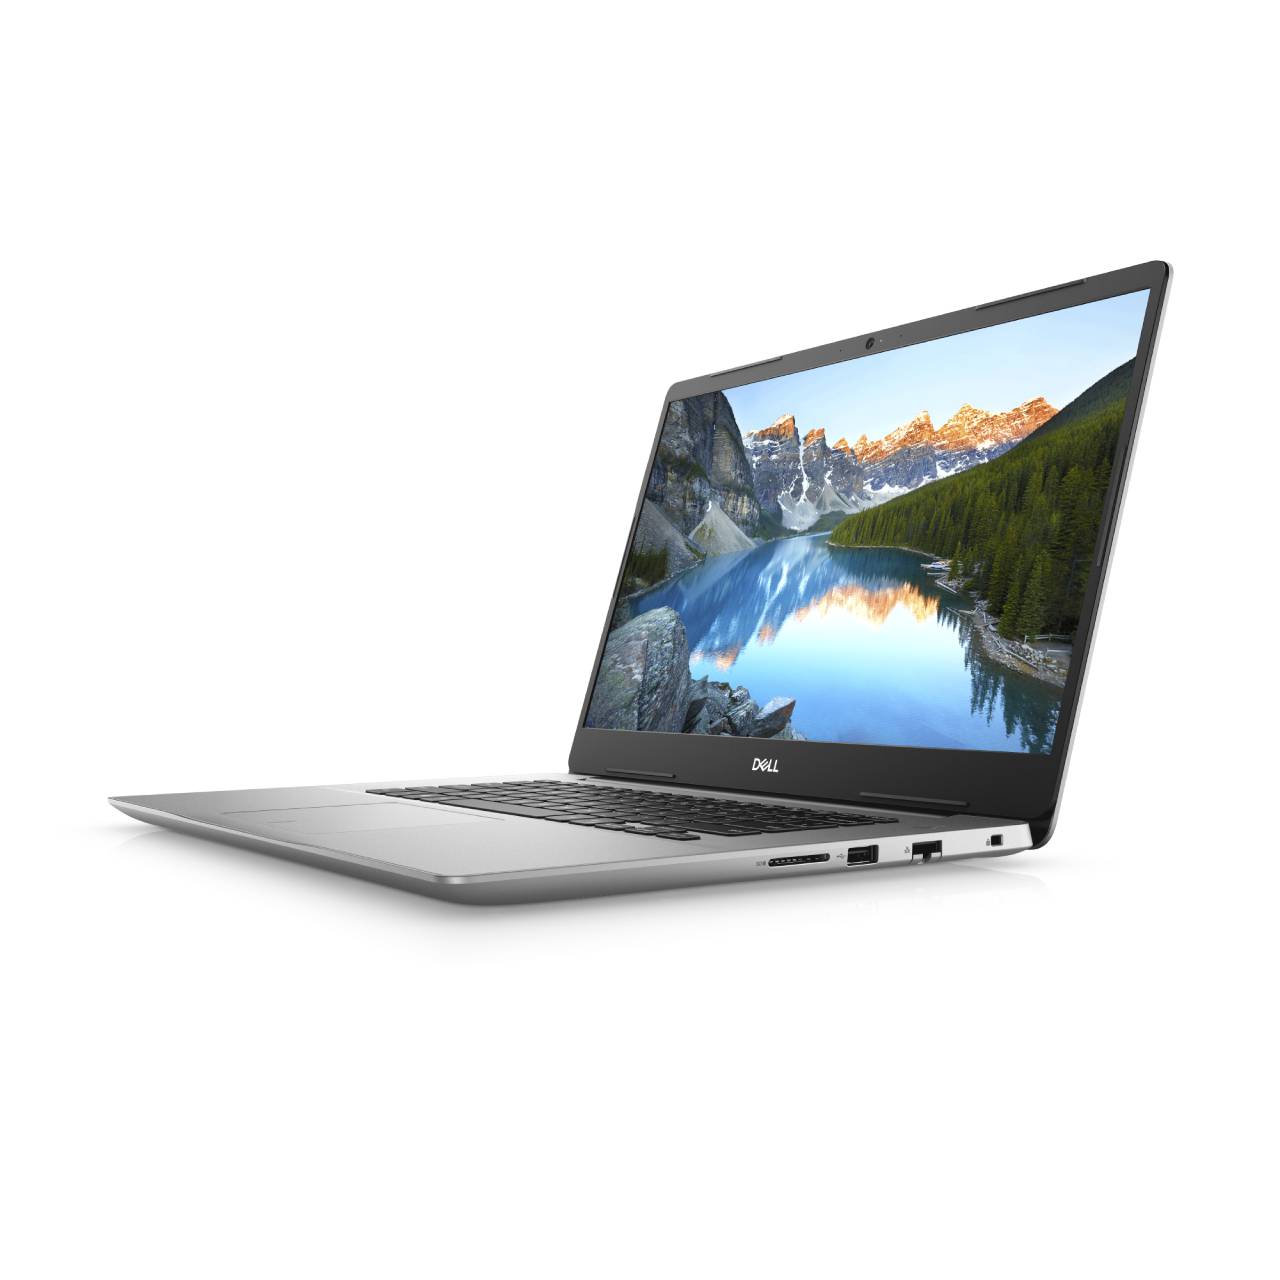 Dell 15.6" FHD Laptop ( Ryzen 5 3500U / 8GB / 256GB SSD) + $111.75 Credit